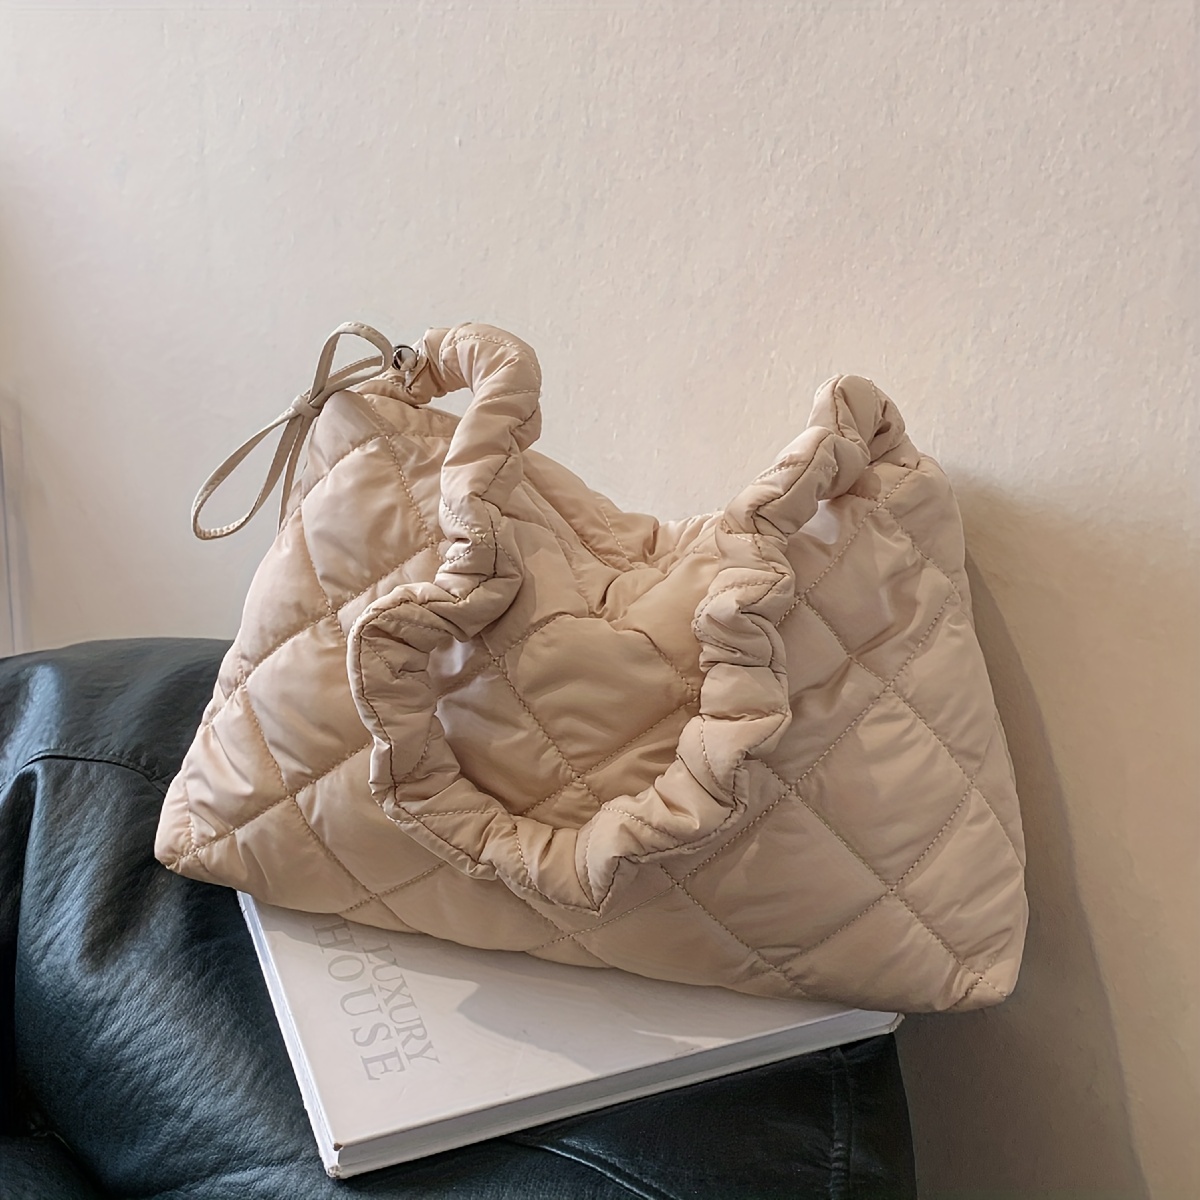 Chanel Black Rouched Large Tote Bag - Vintage Lux